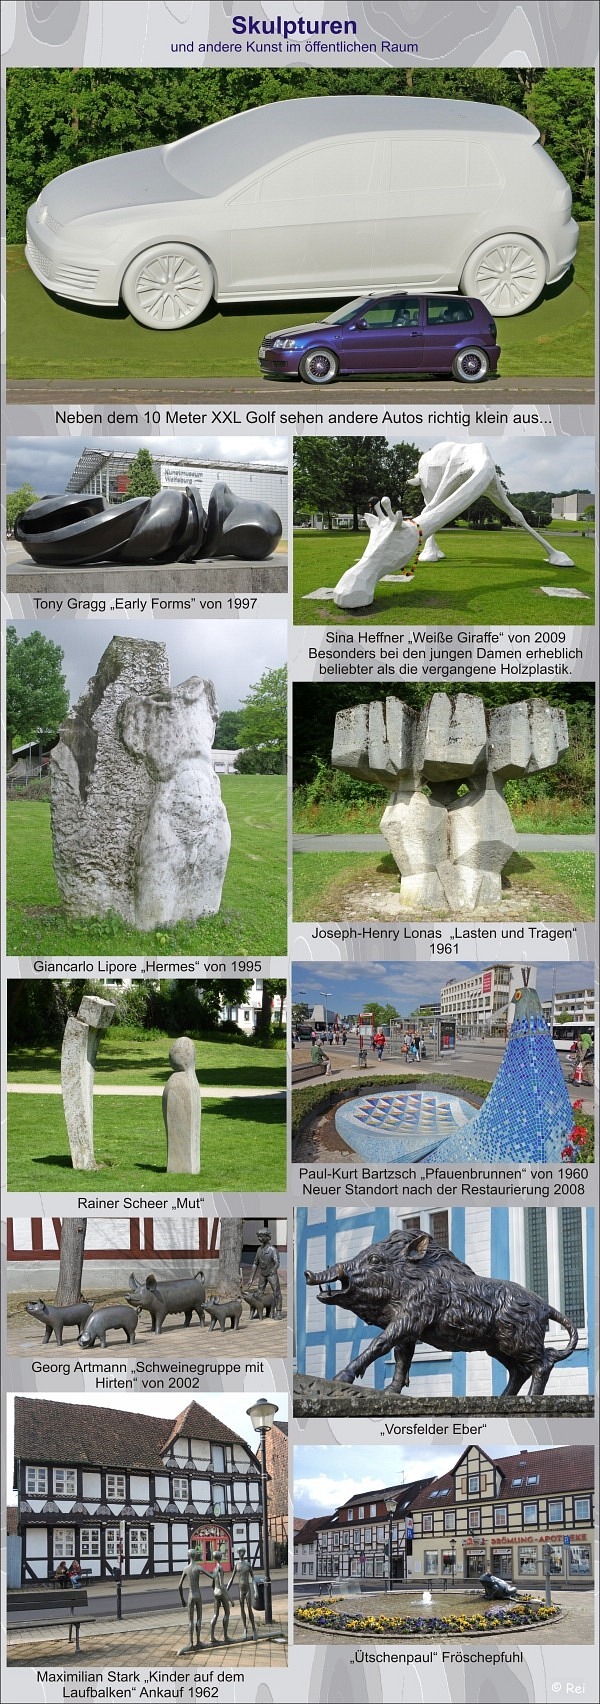 Skulpturen in Wolfsburg